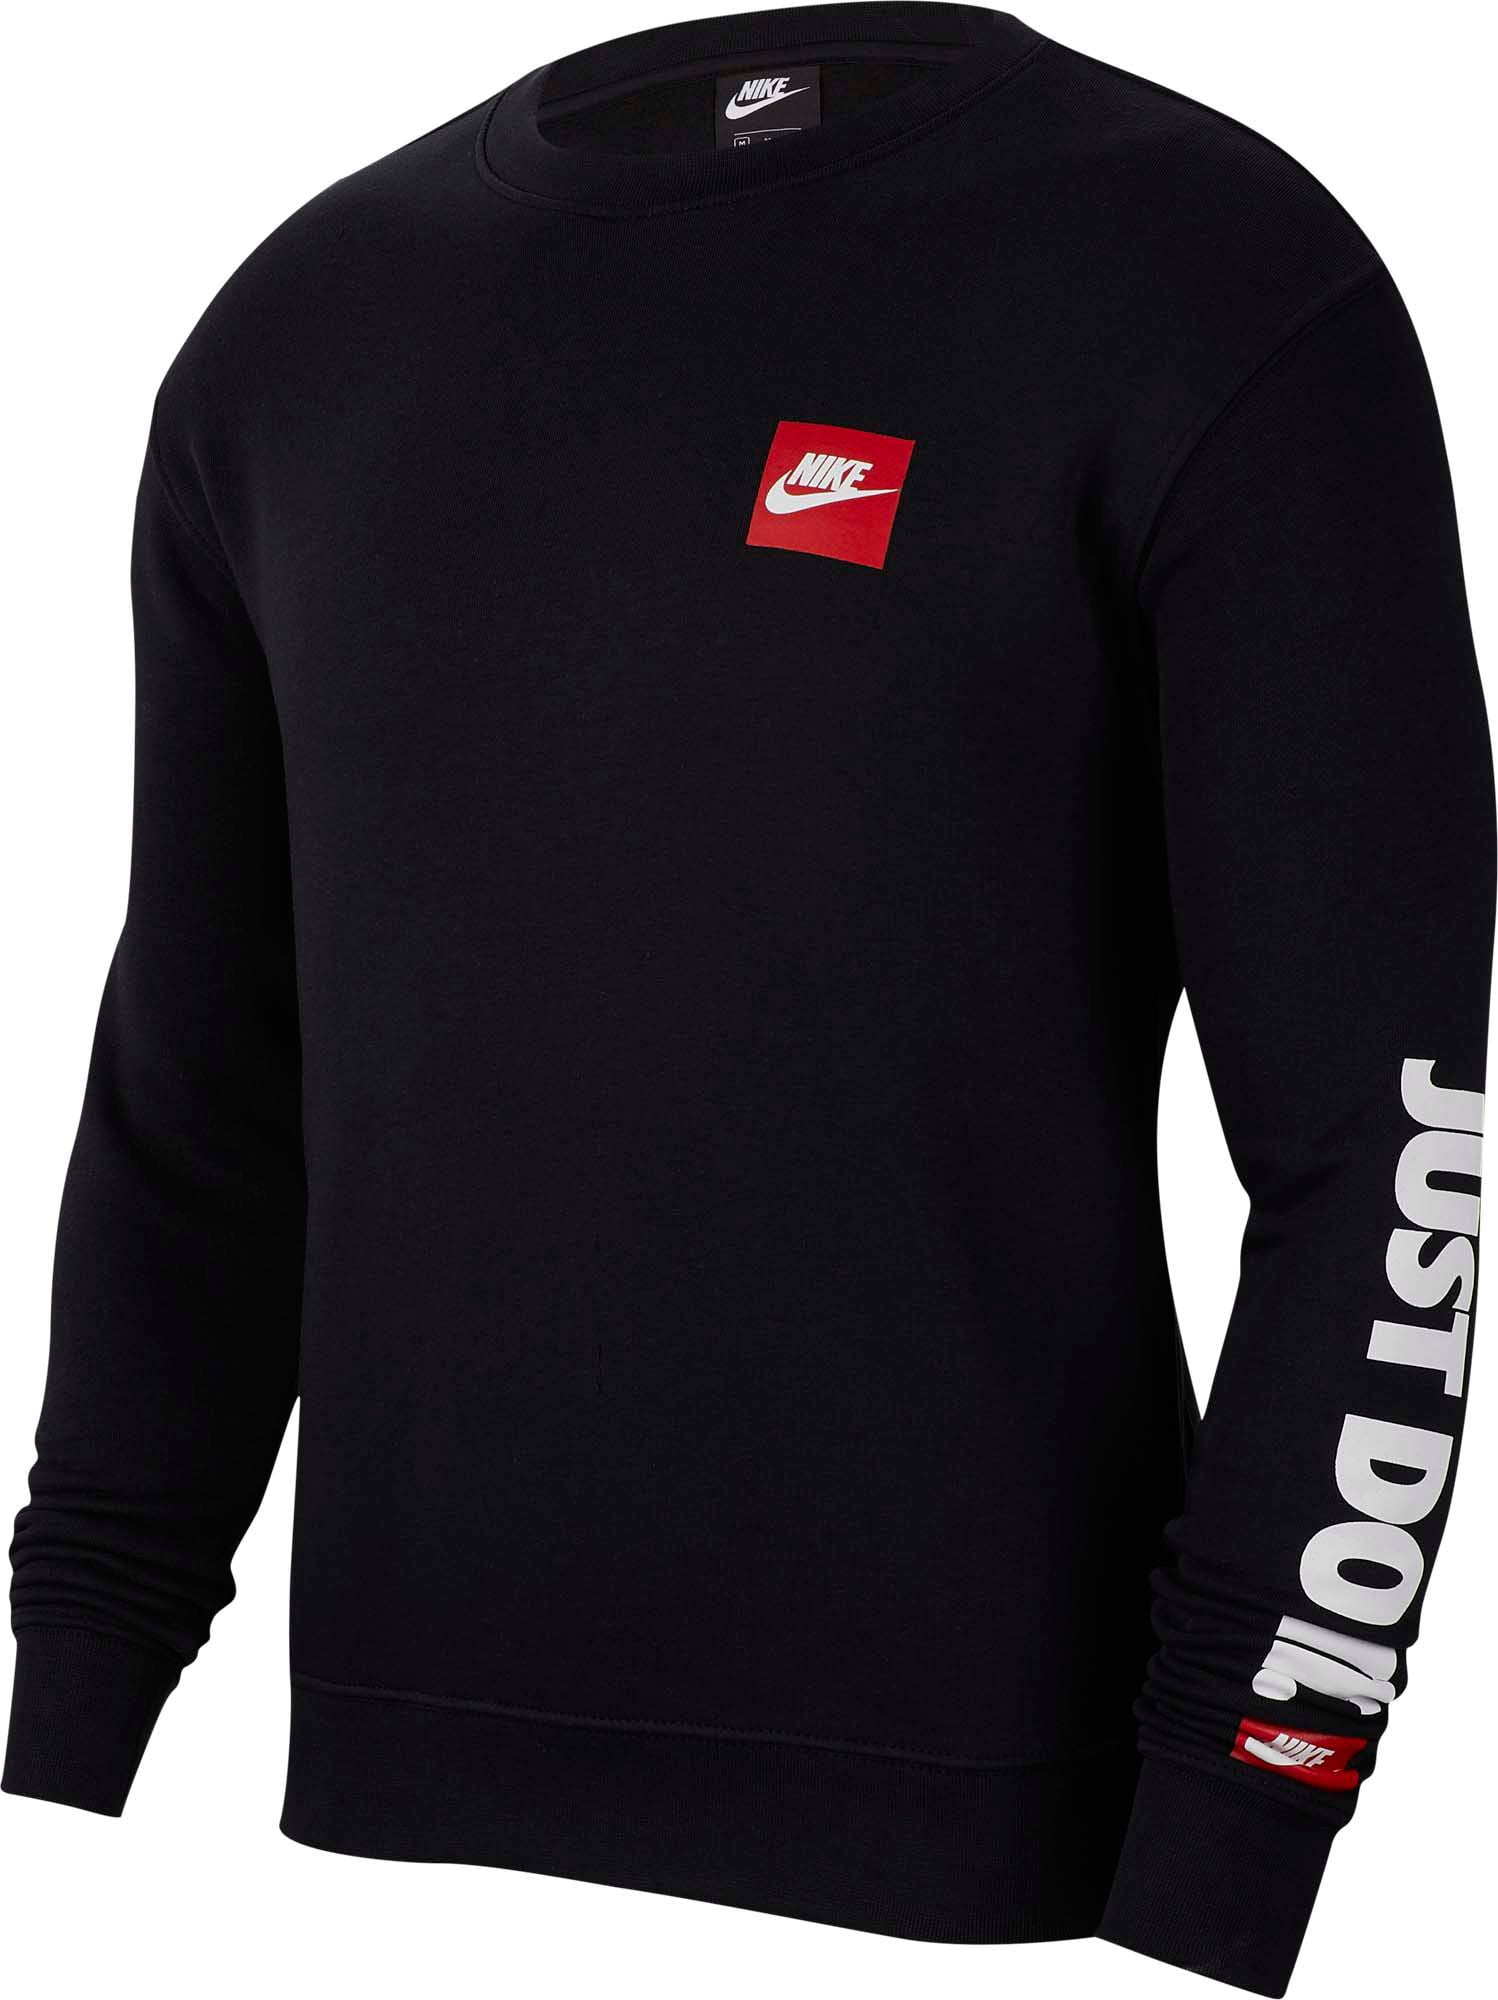 Nike - Nike Men's Sportswear Crewneck Sweatshirt - Walmart.com ...